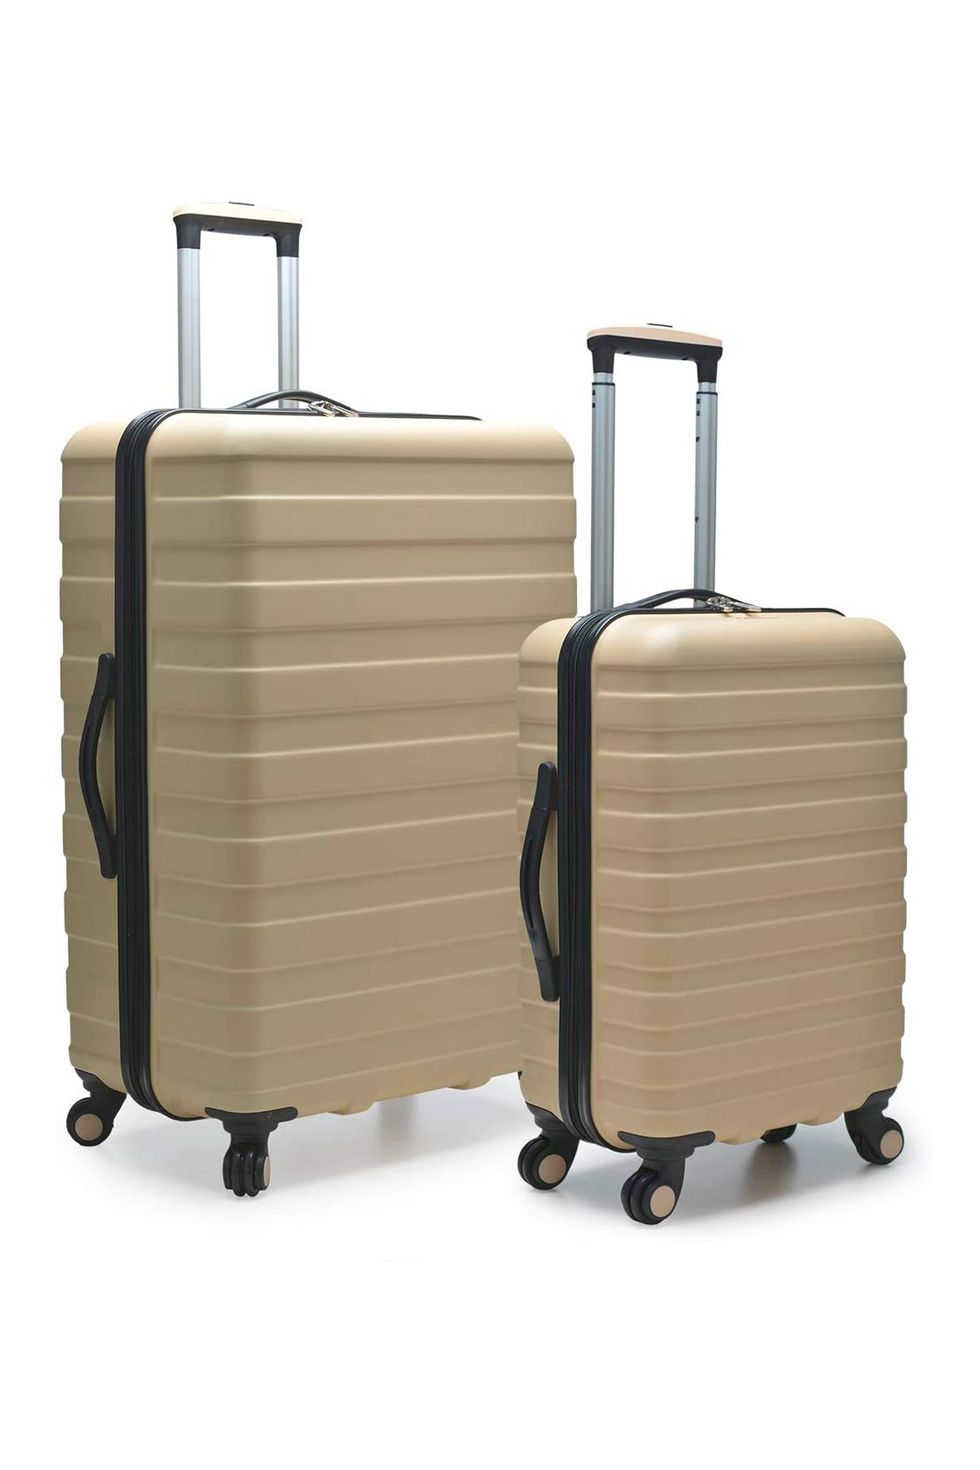 U.S. Traveler Cypress Colorful Hardside Spinner Luggage Set, Sand, 2-Piece